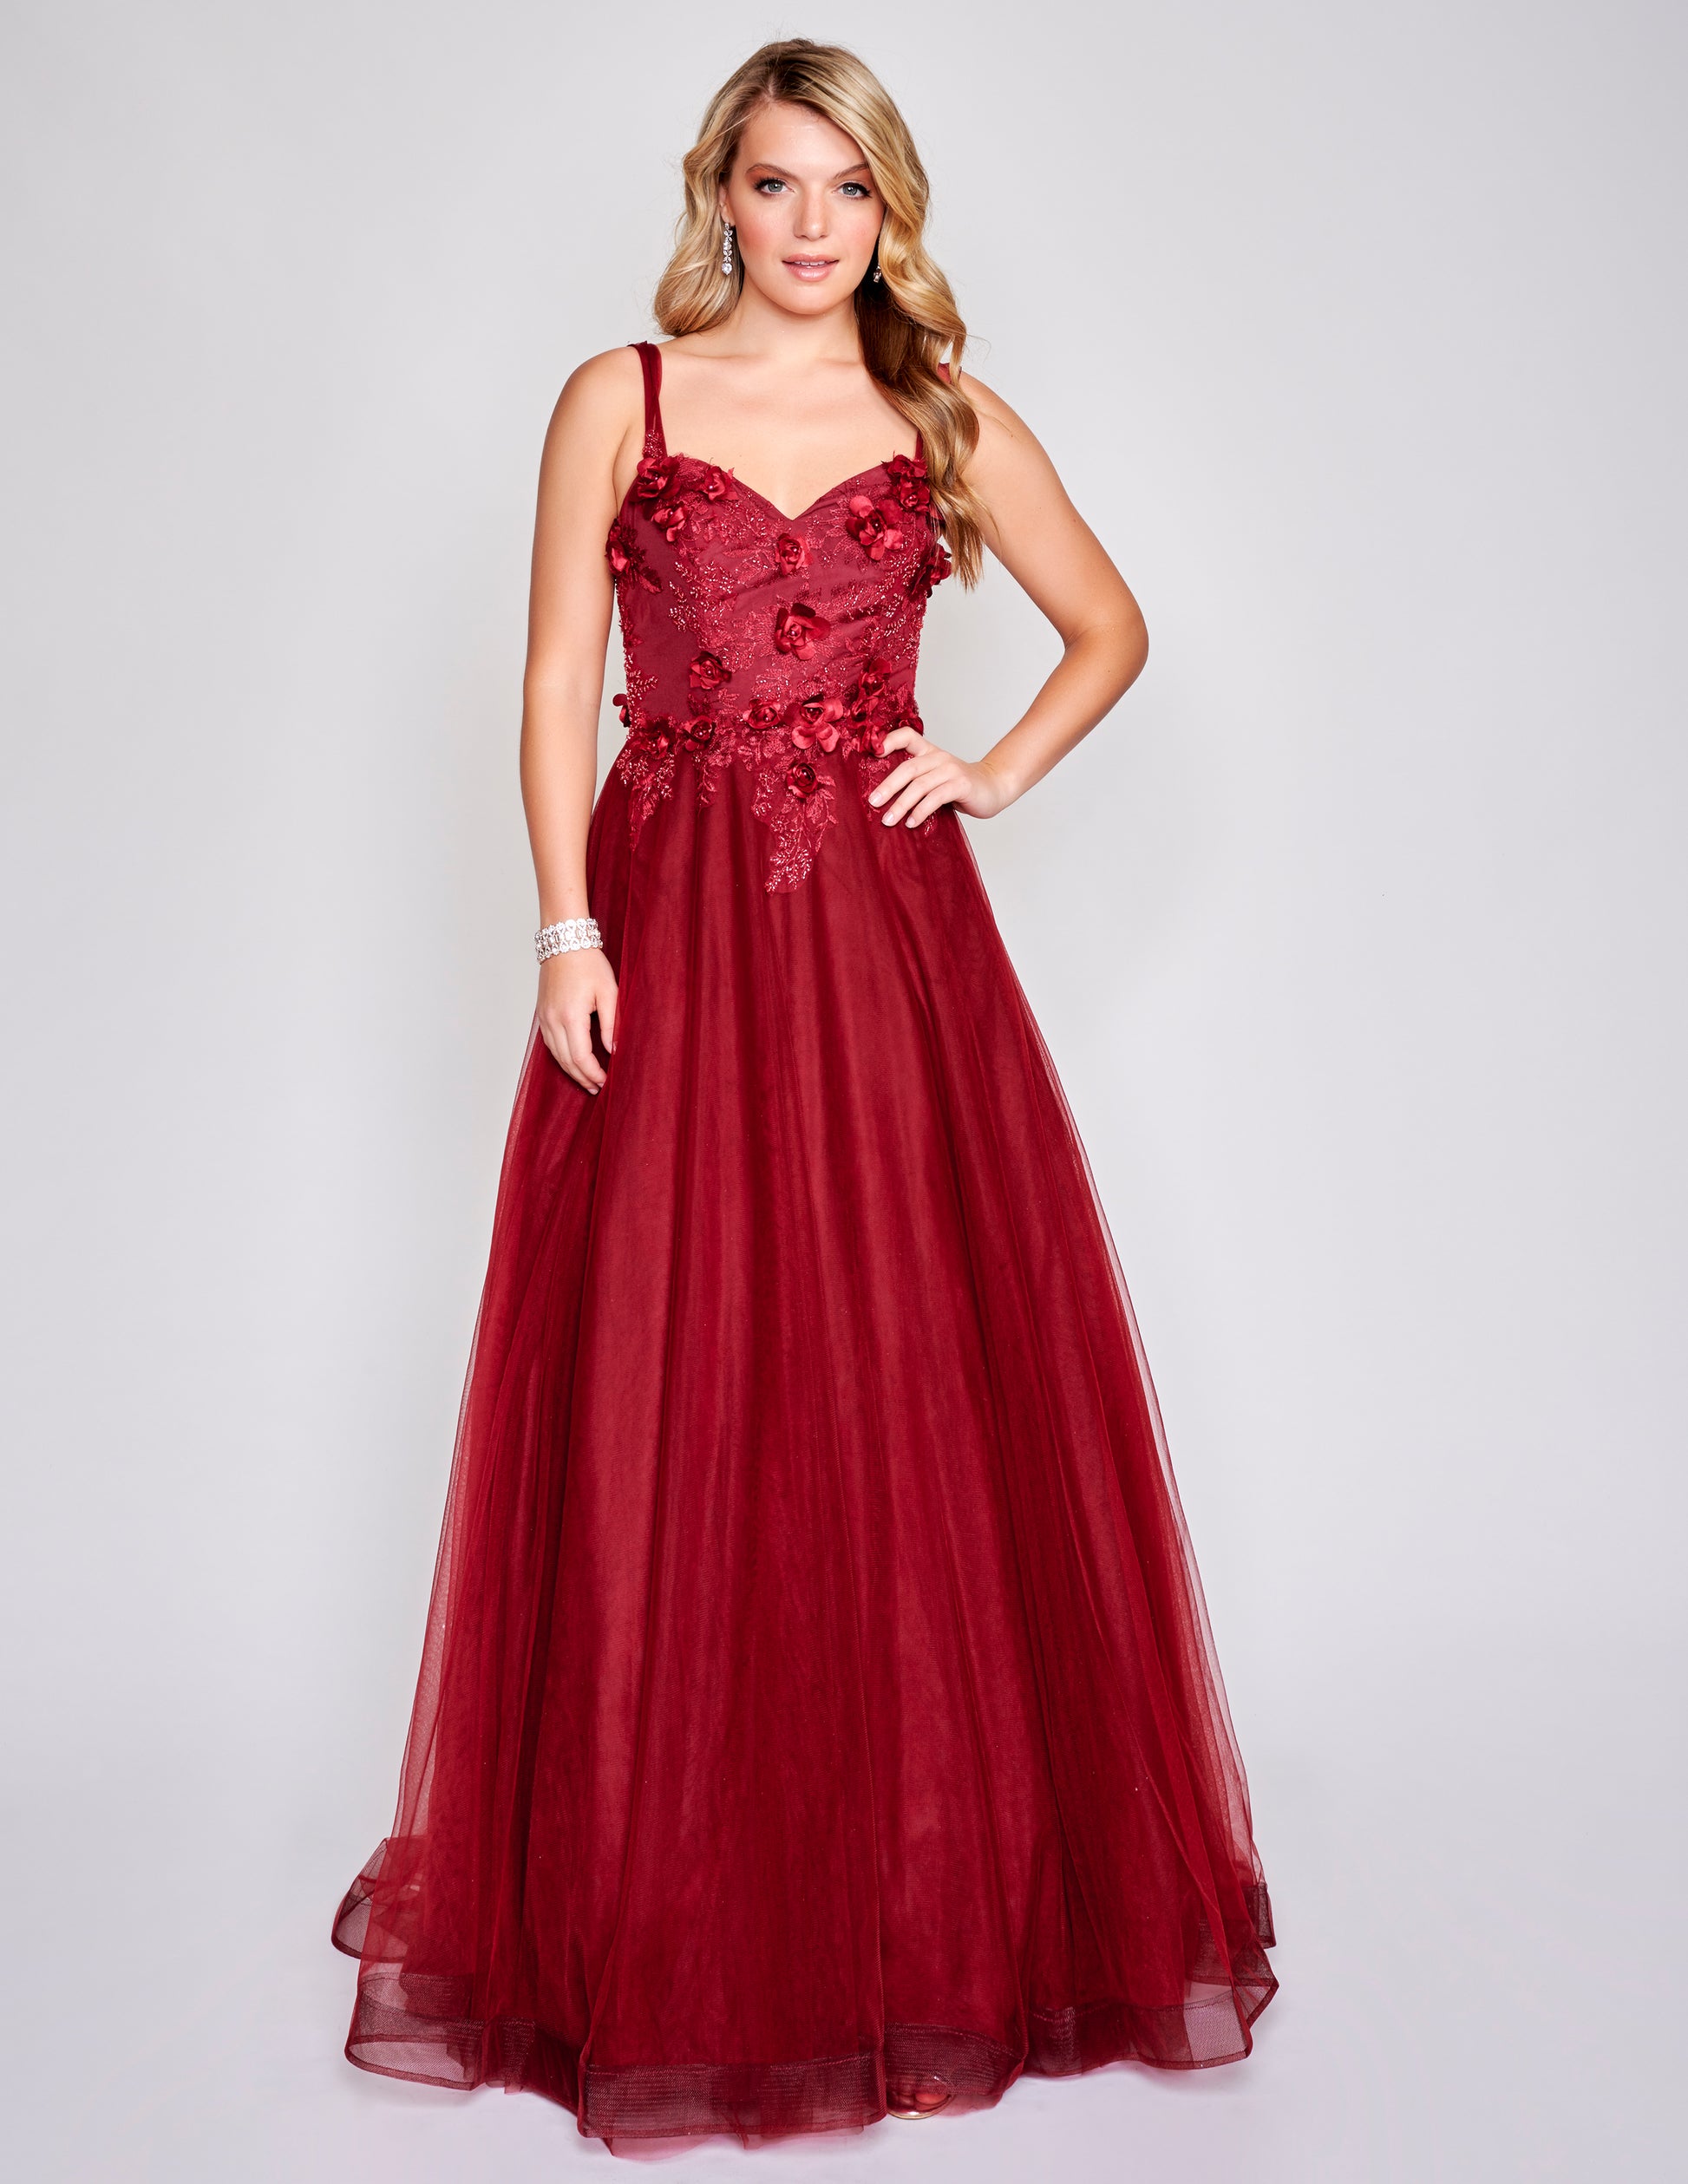 Nina Canacci 2331 Prom Dress 3D Flowered Detailed Top A line Evening Ballgown Sweetheart Neckline